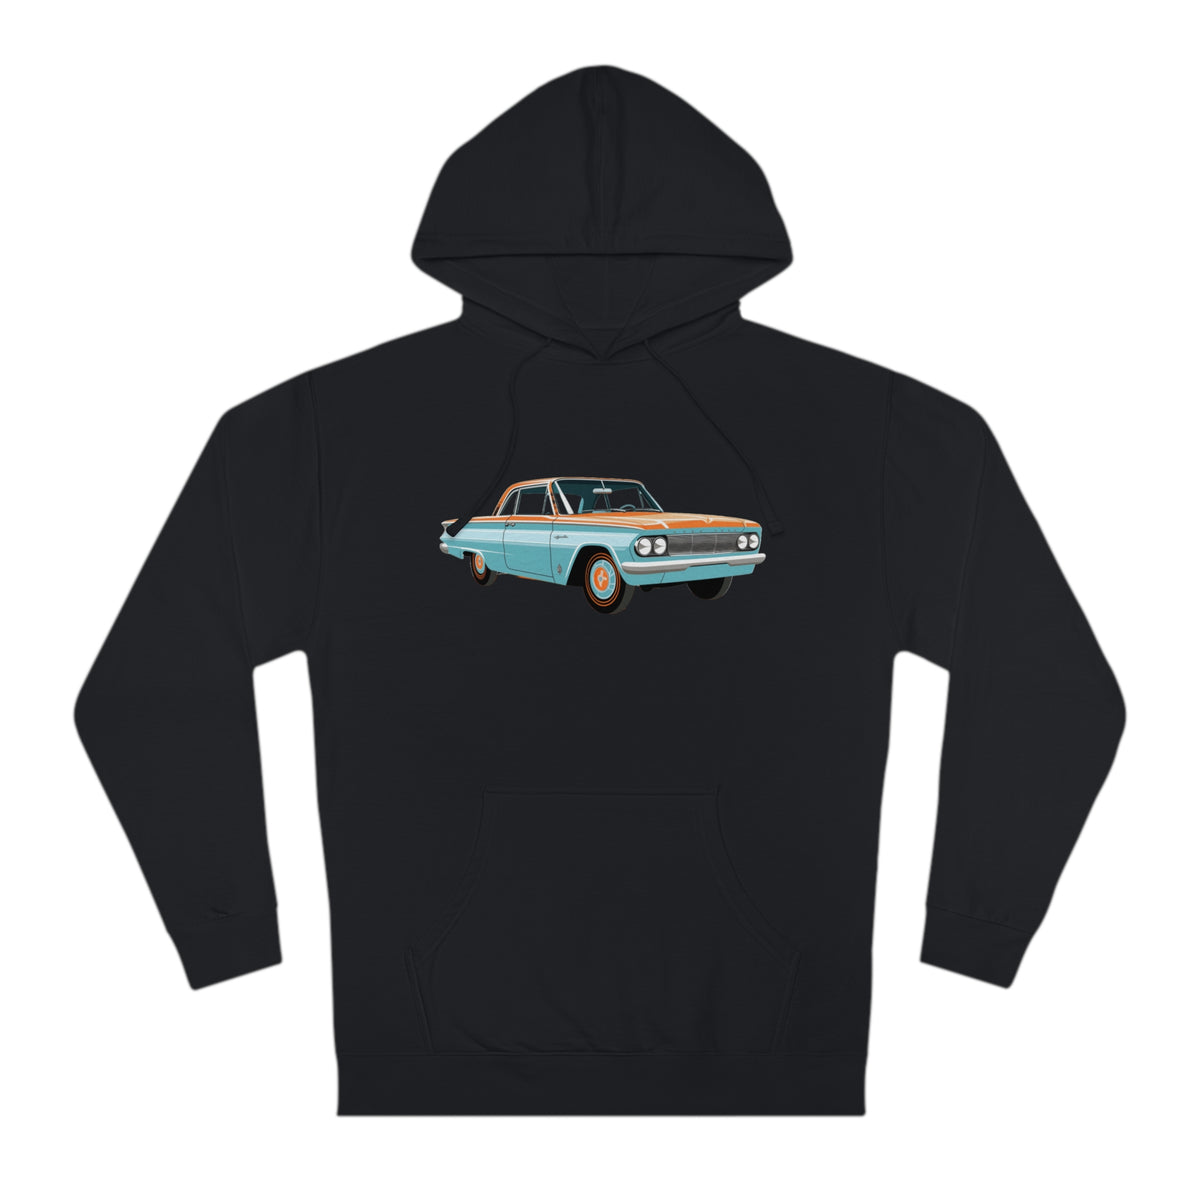 "Retro Racer" Classic Vintage Car Enthusiast Hoodie/Hooded Sweatshirt